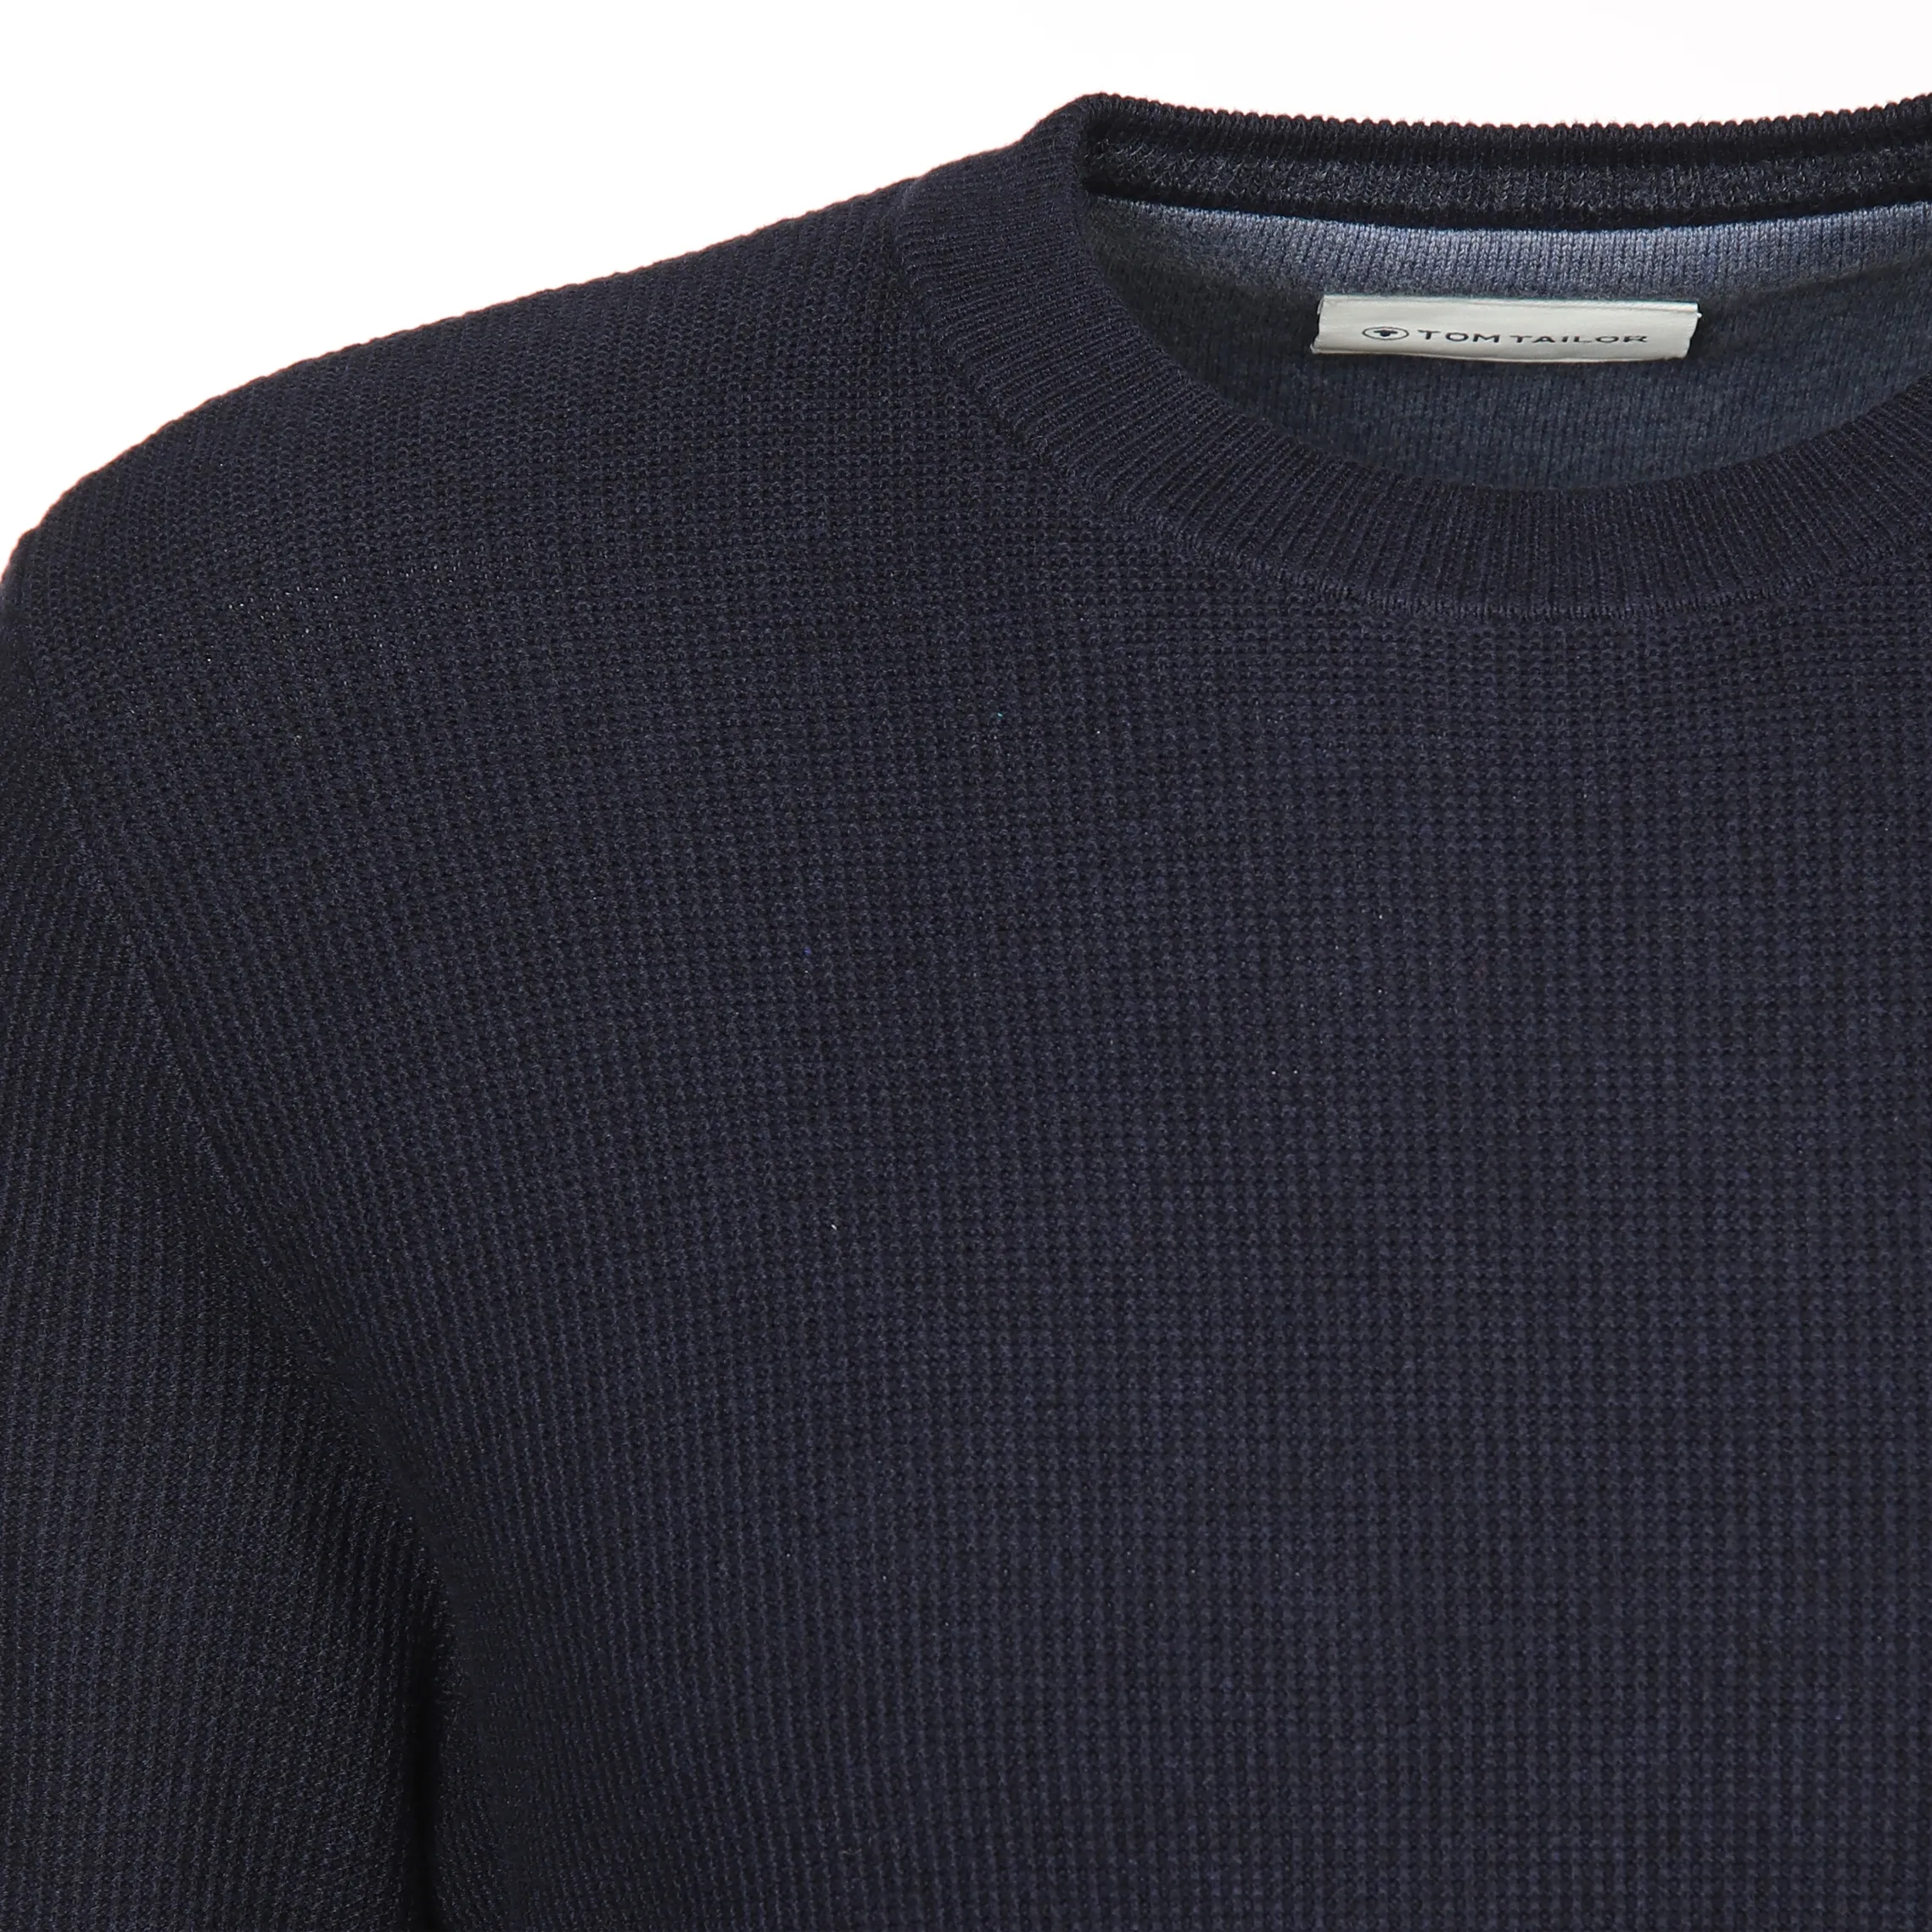 Tom Tailor 1038612 NOS structured crewneck knit Blau 884262 13160 3